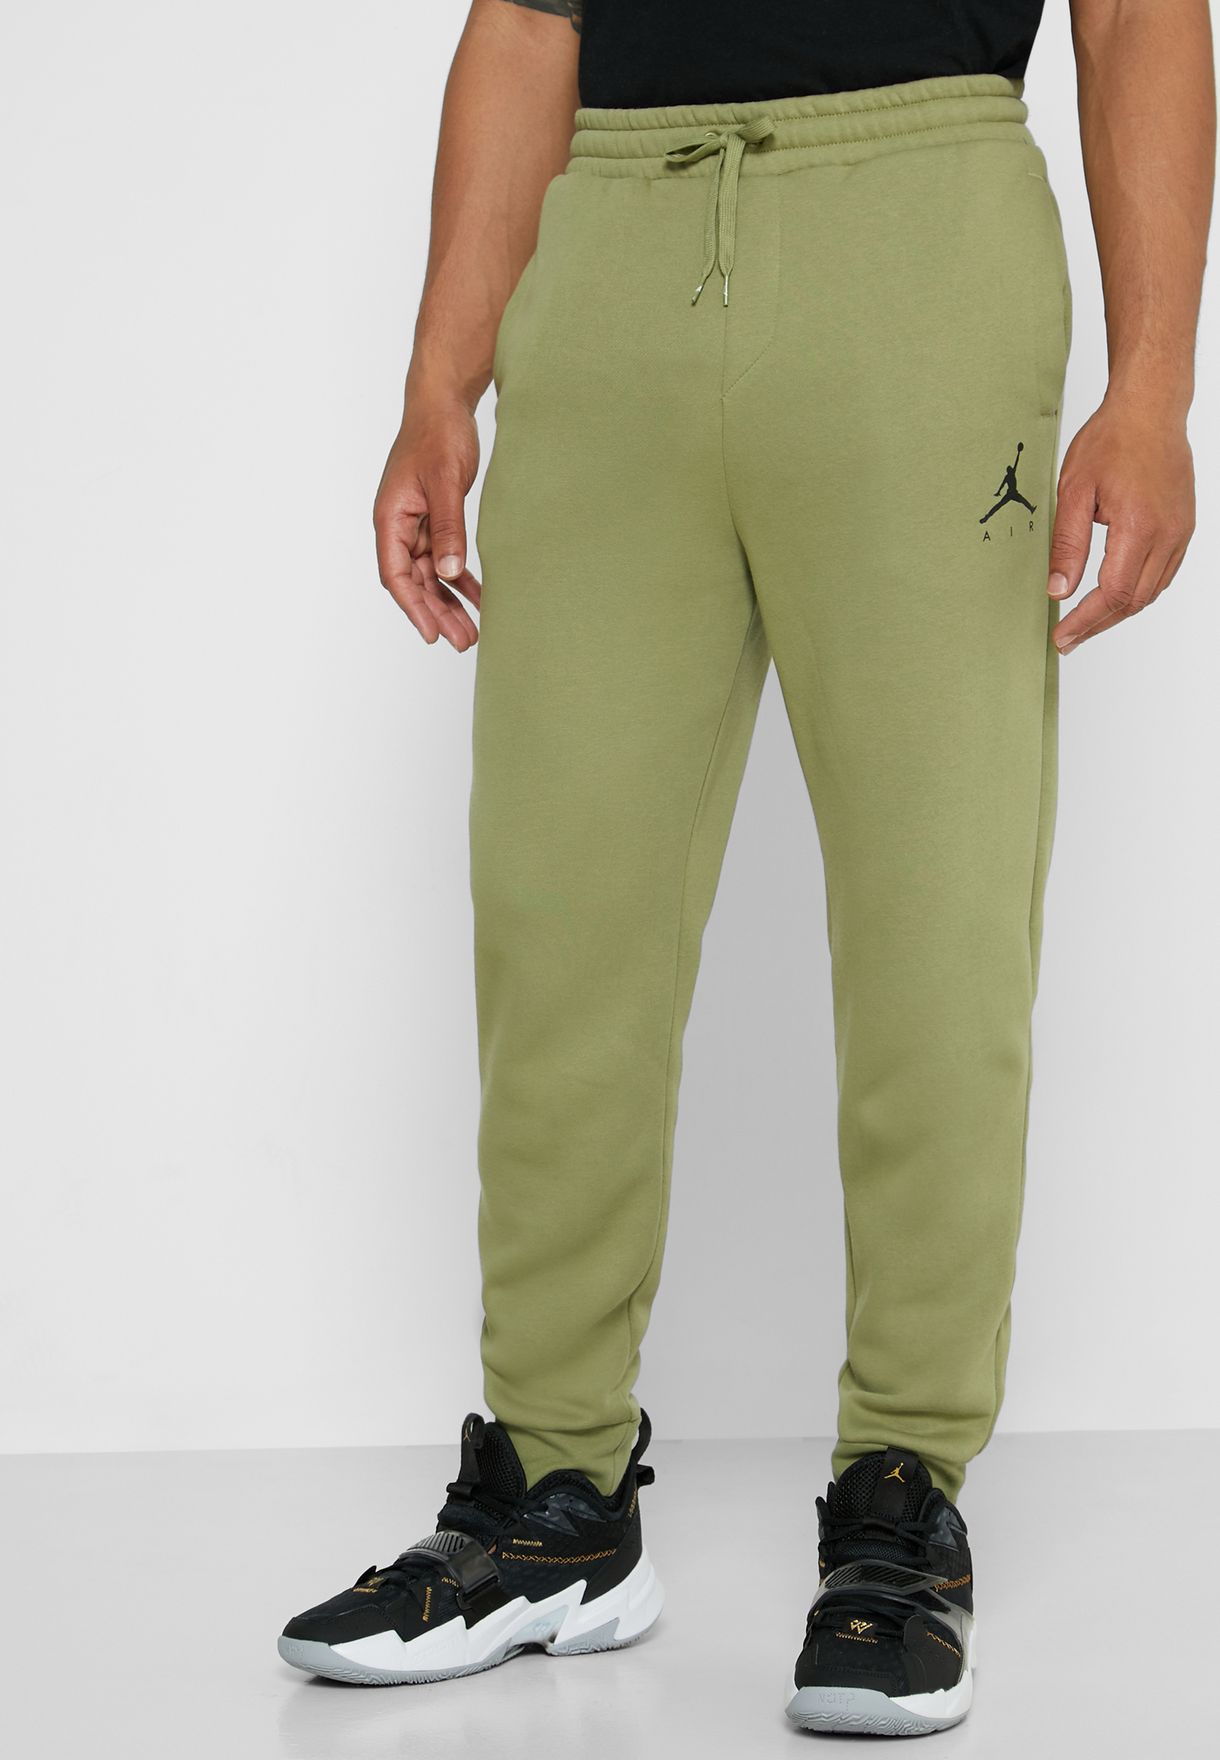 green jordan pants